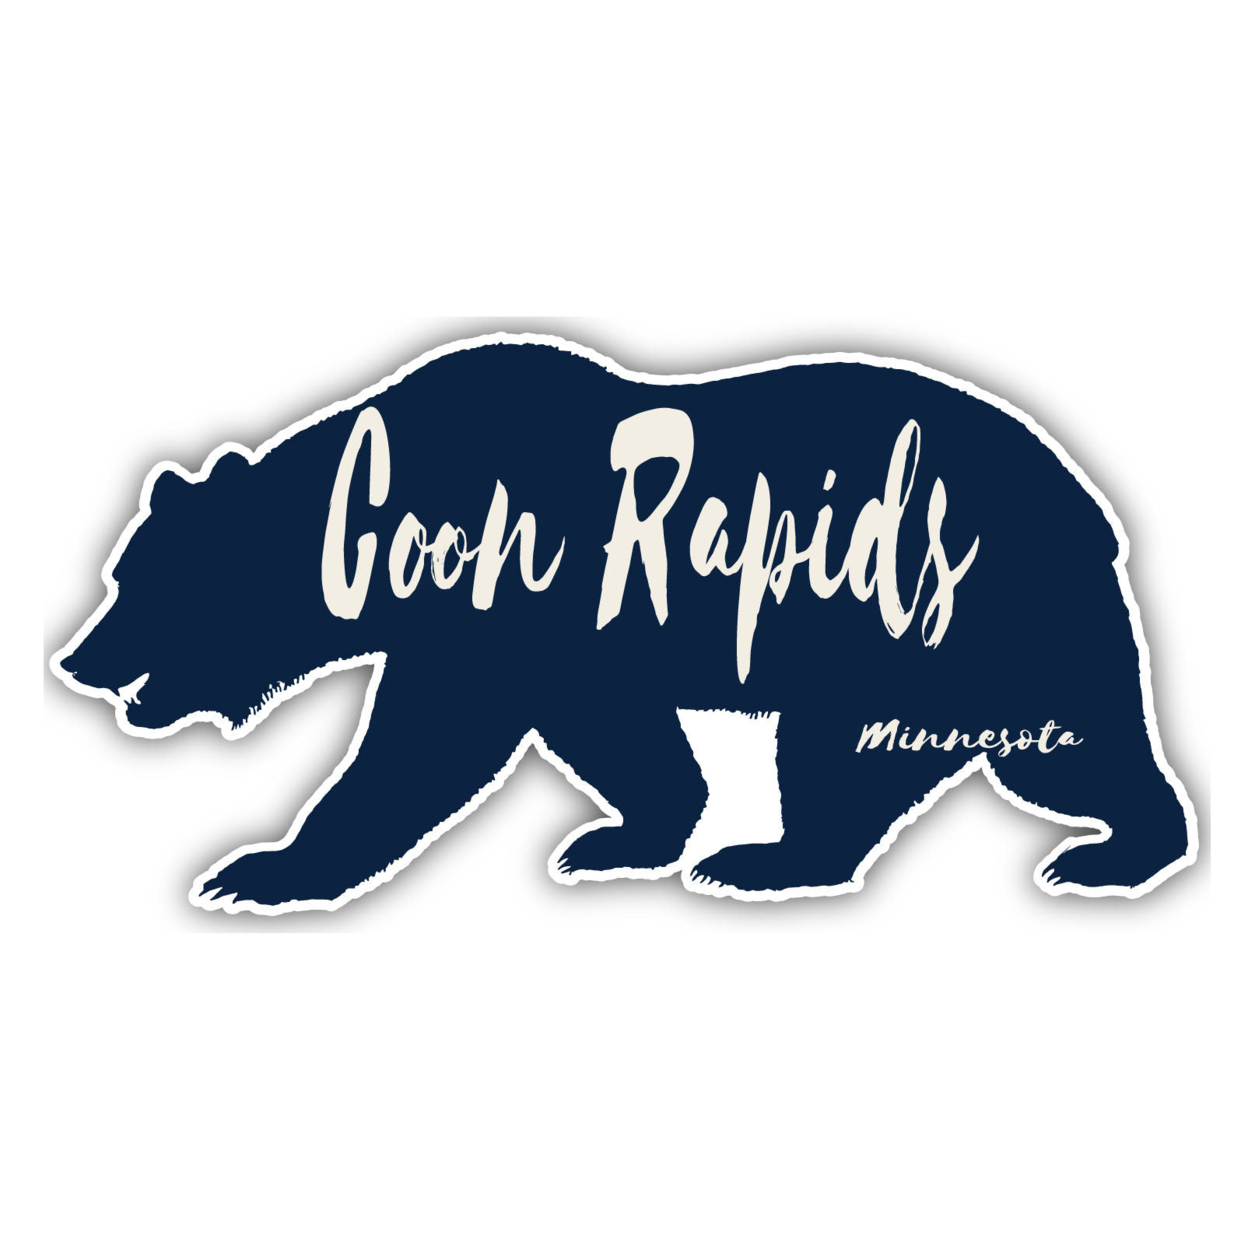 Coon Rapids Minnesota Souvenir Decorative Stickers (Choose Theme And Size) - Single Unit, 8-Inch, Bear